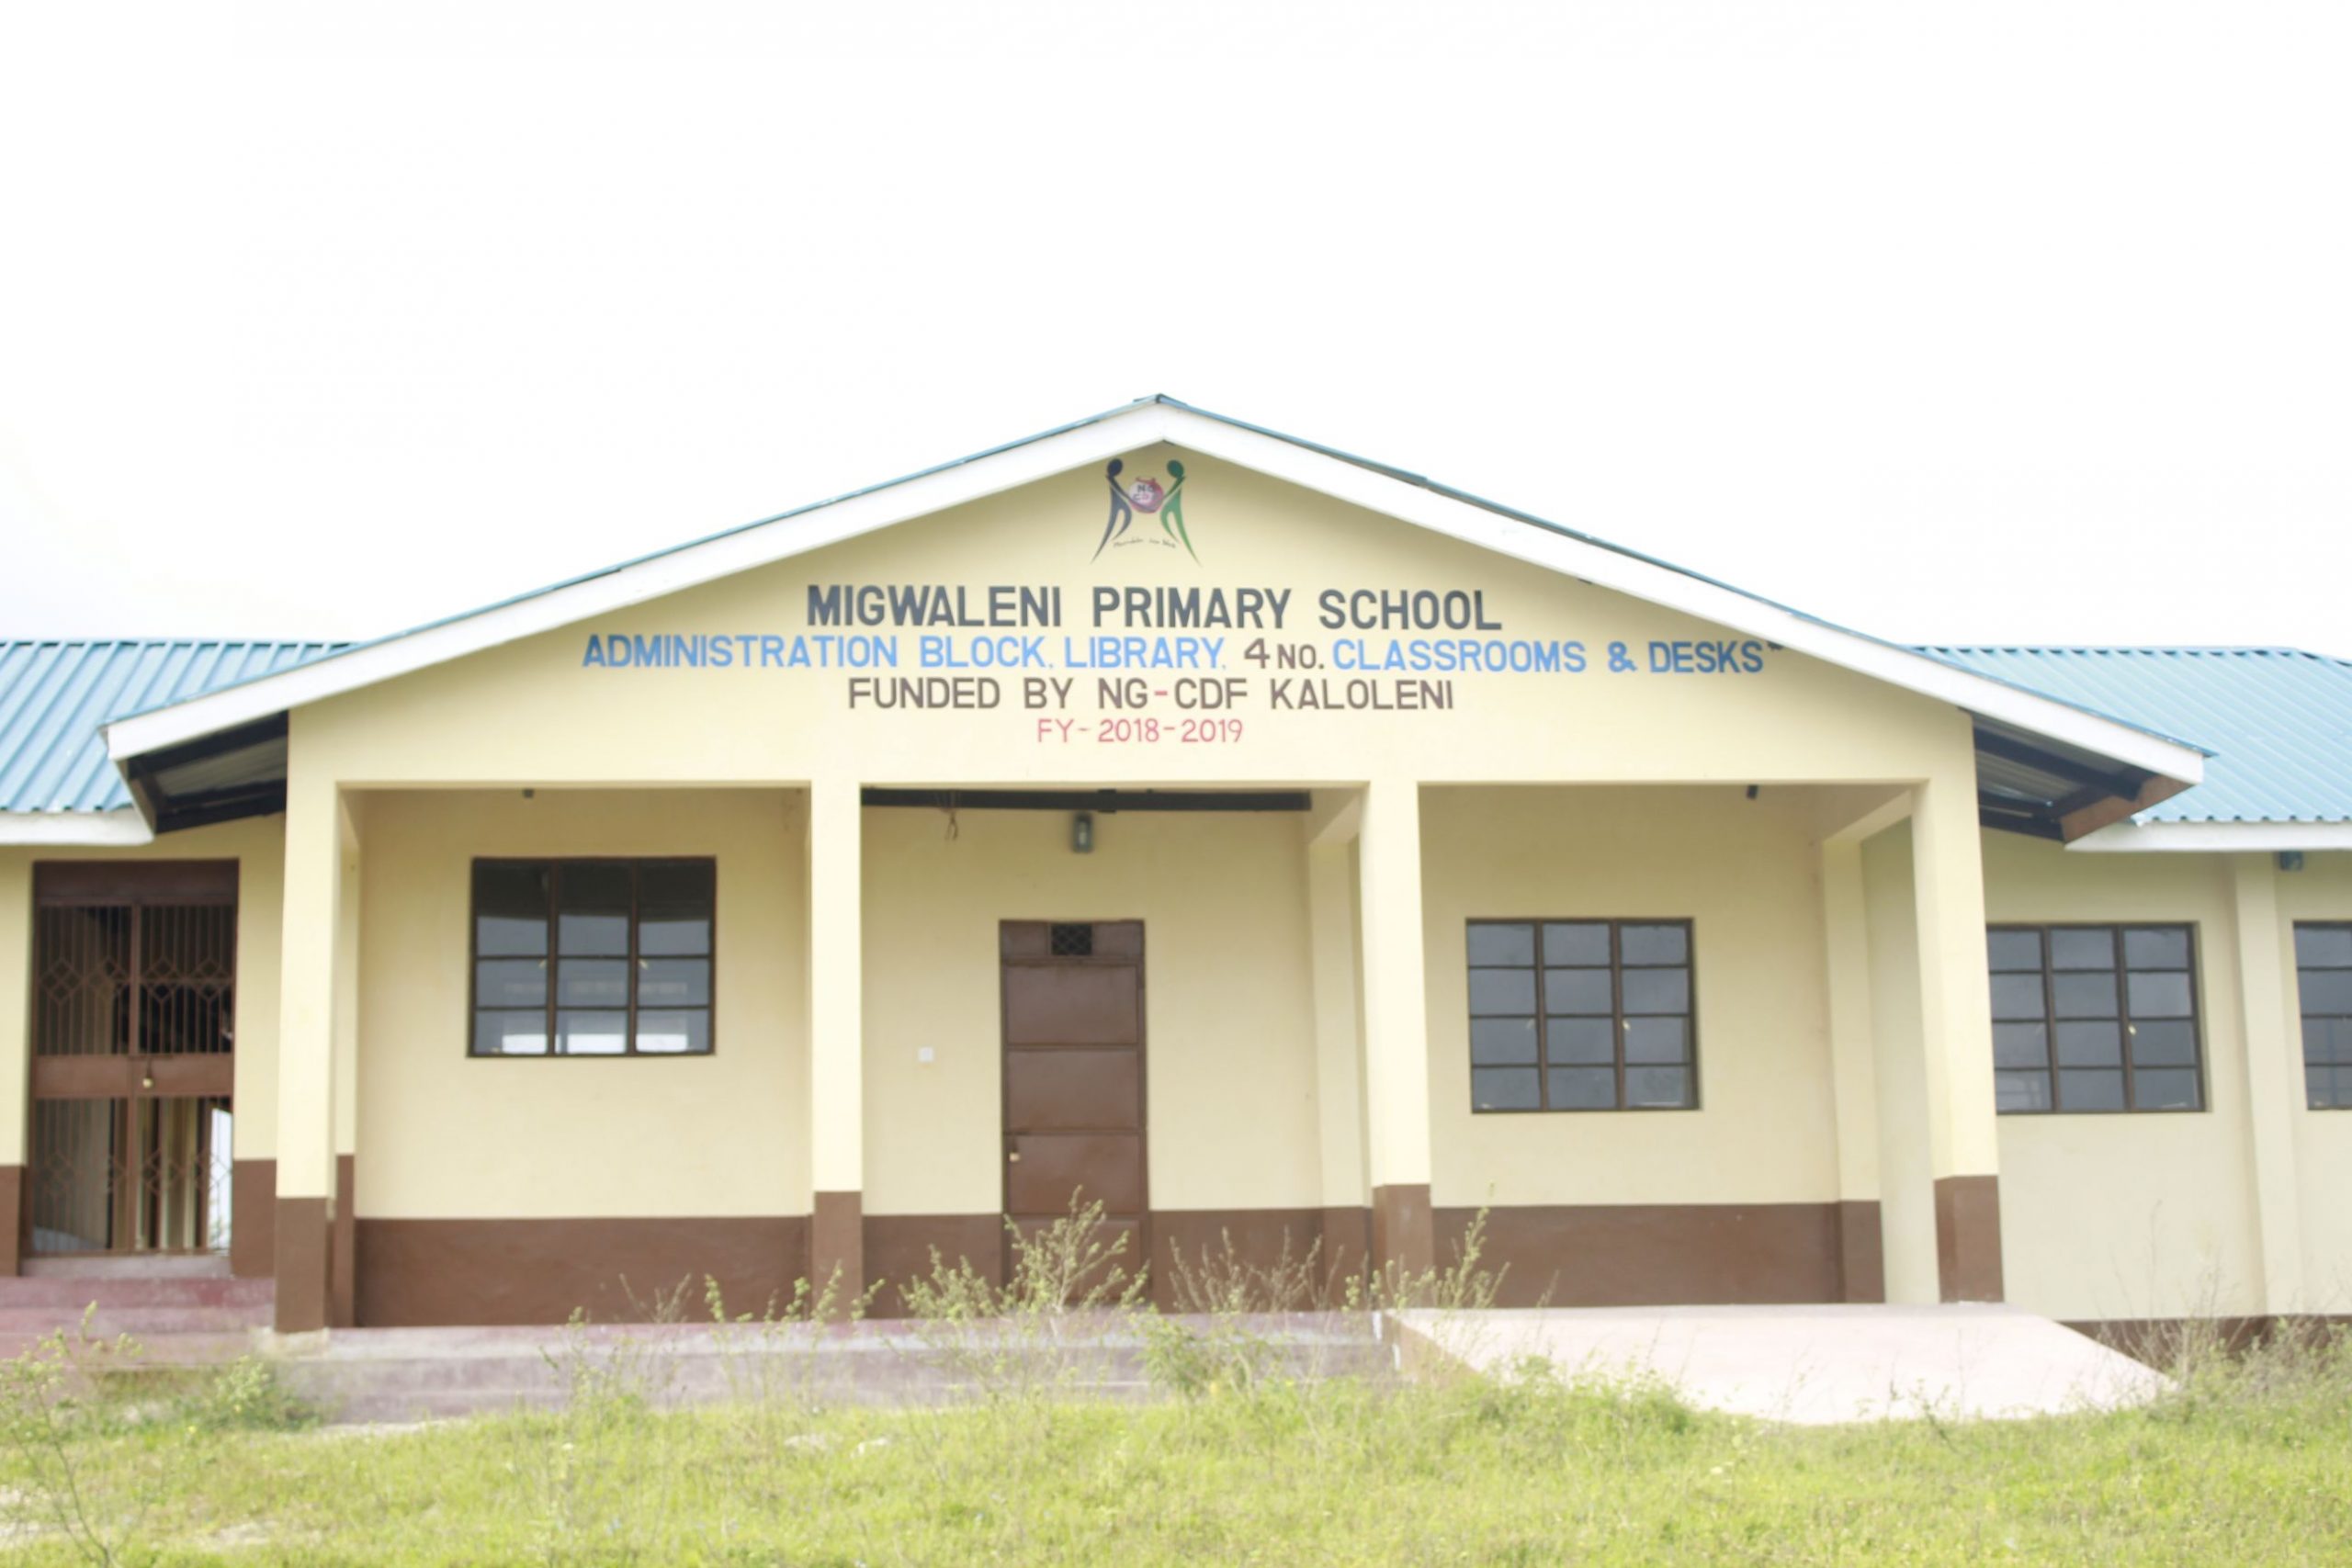 Migwaleni Primary School